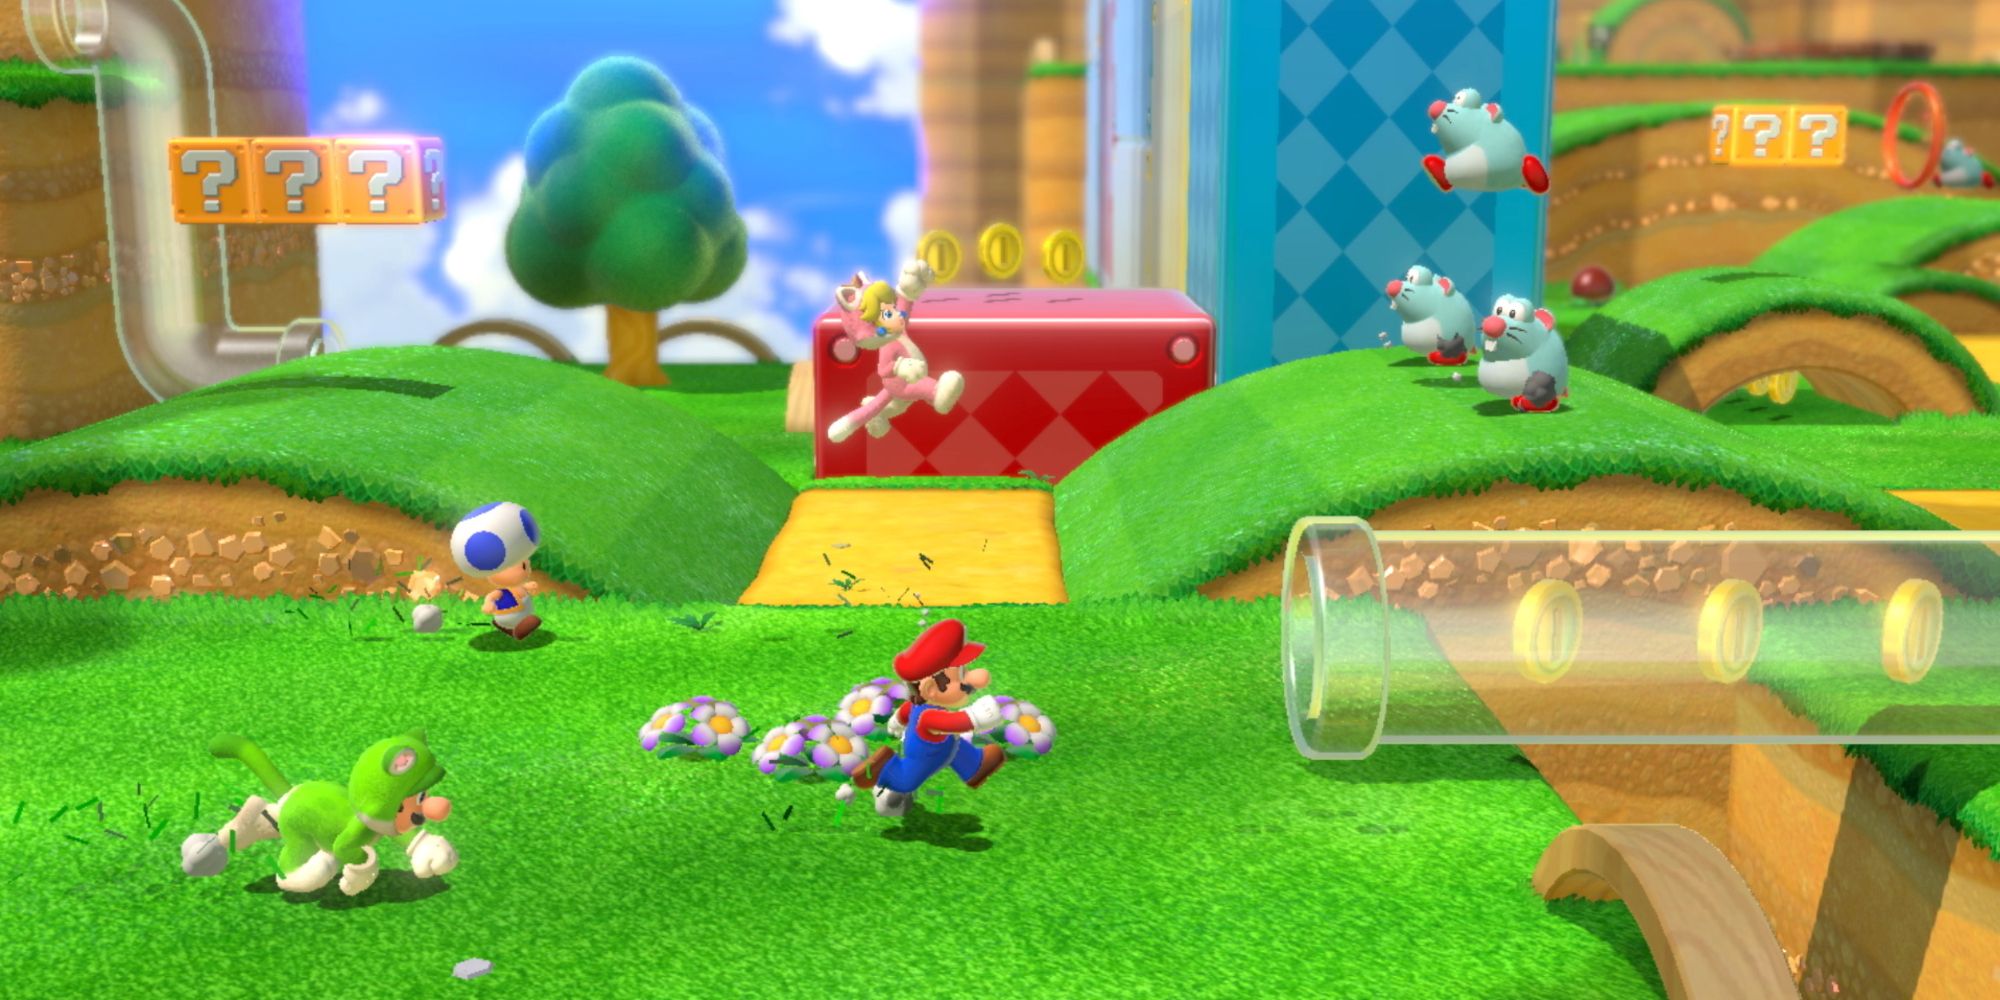 Mario, Luigi, Toad, and Princess Peach running through a grass level in Super Mario 3D World